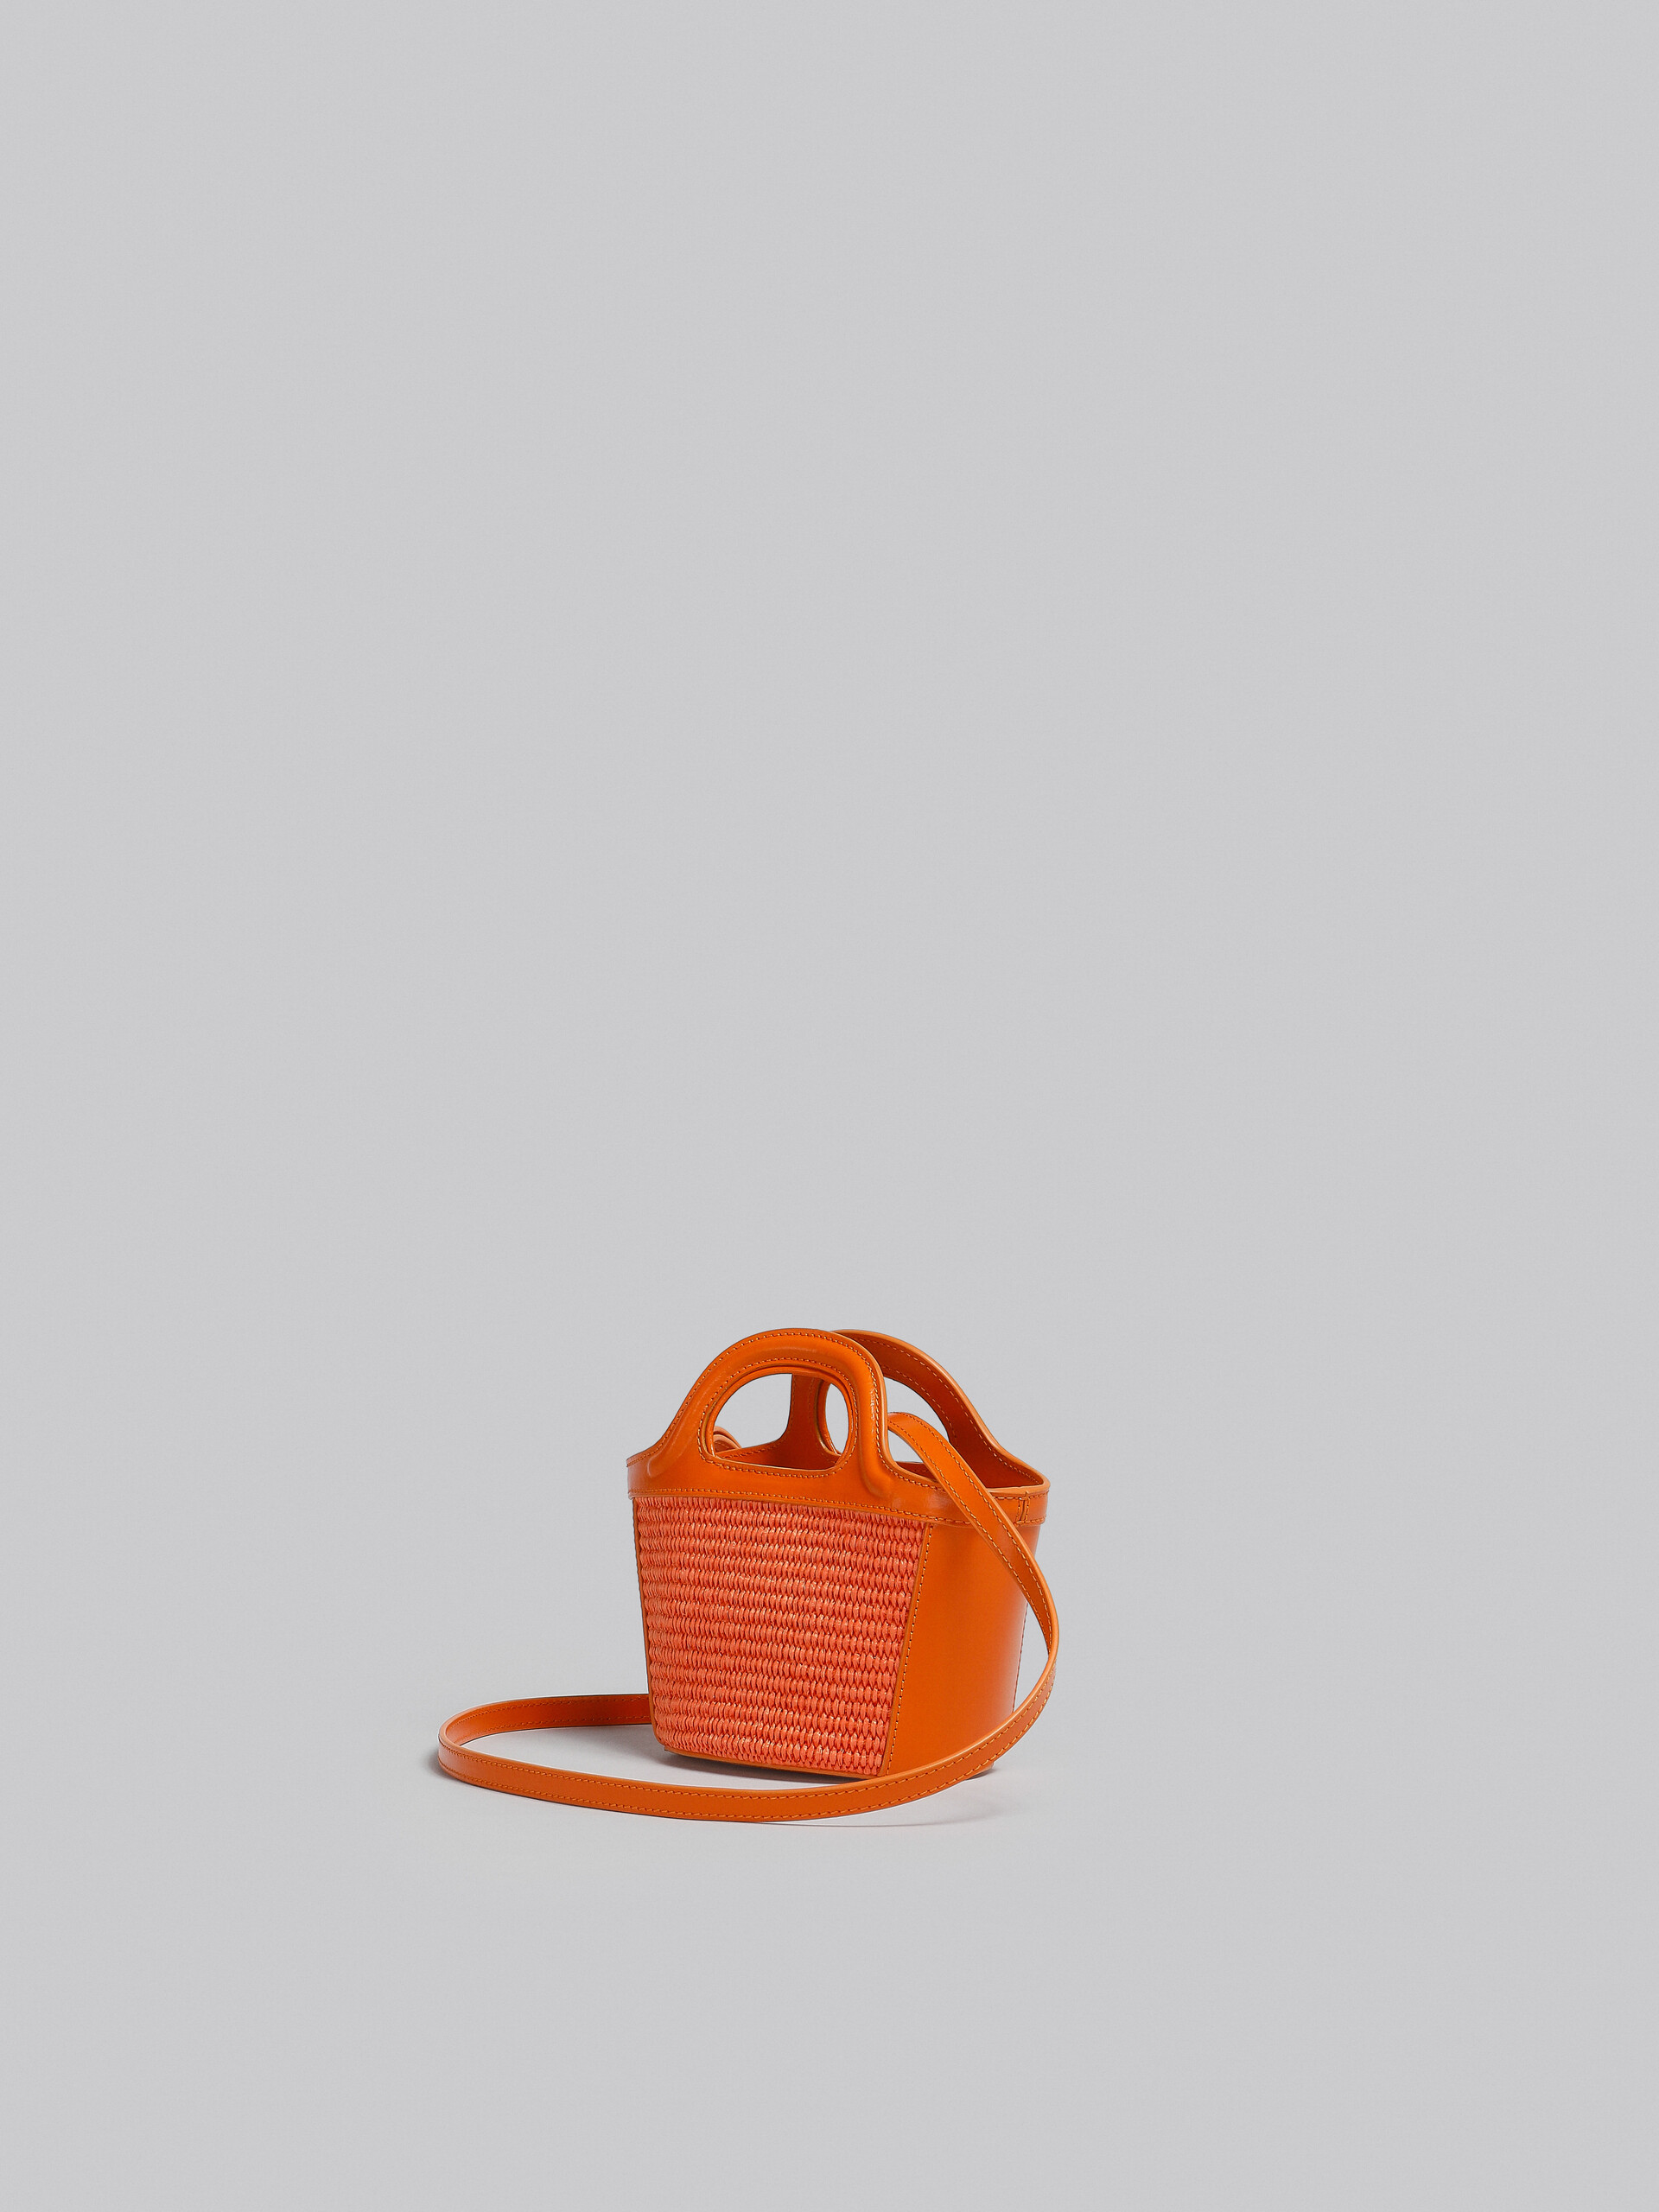 Tropicalia Micro Bag in orange leather and raffia - Handbags - Image 3